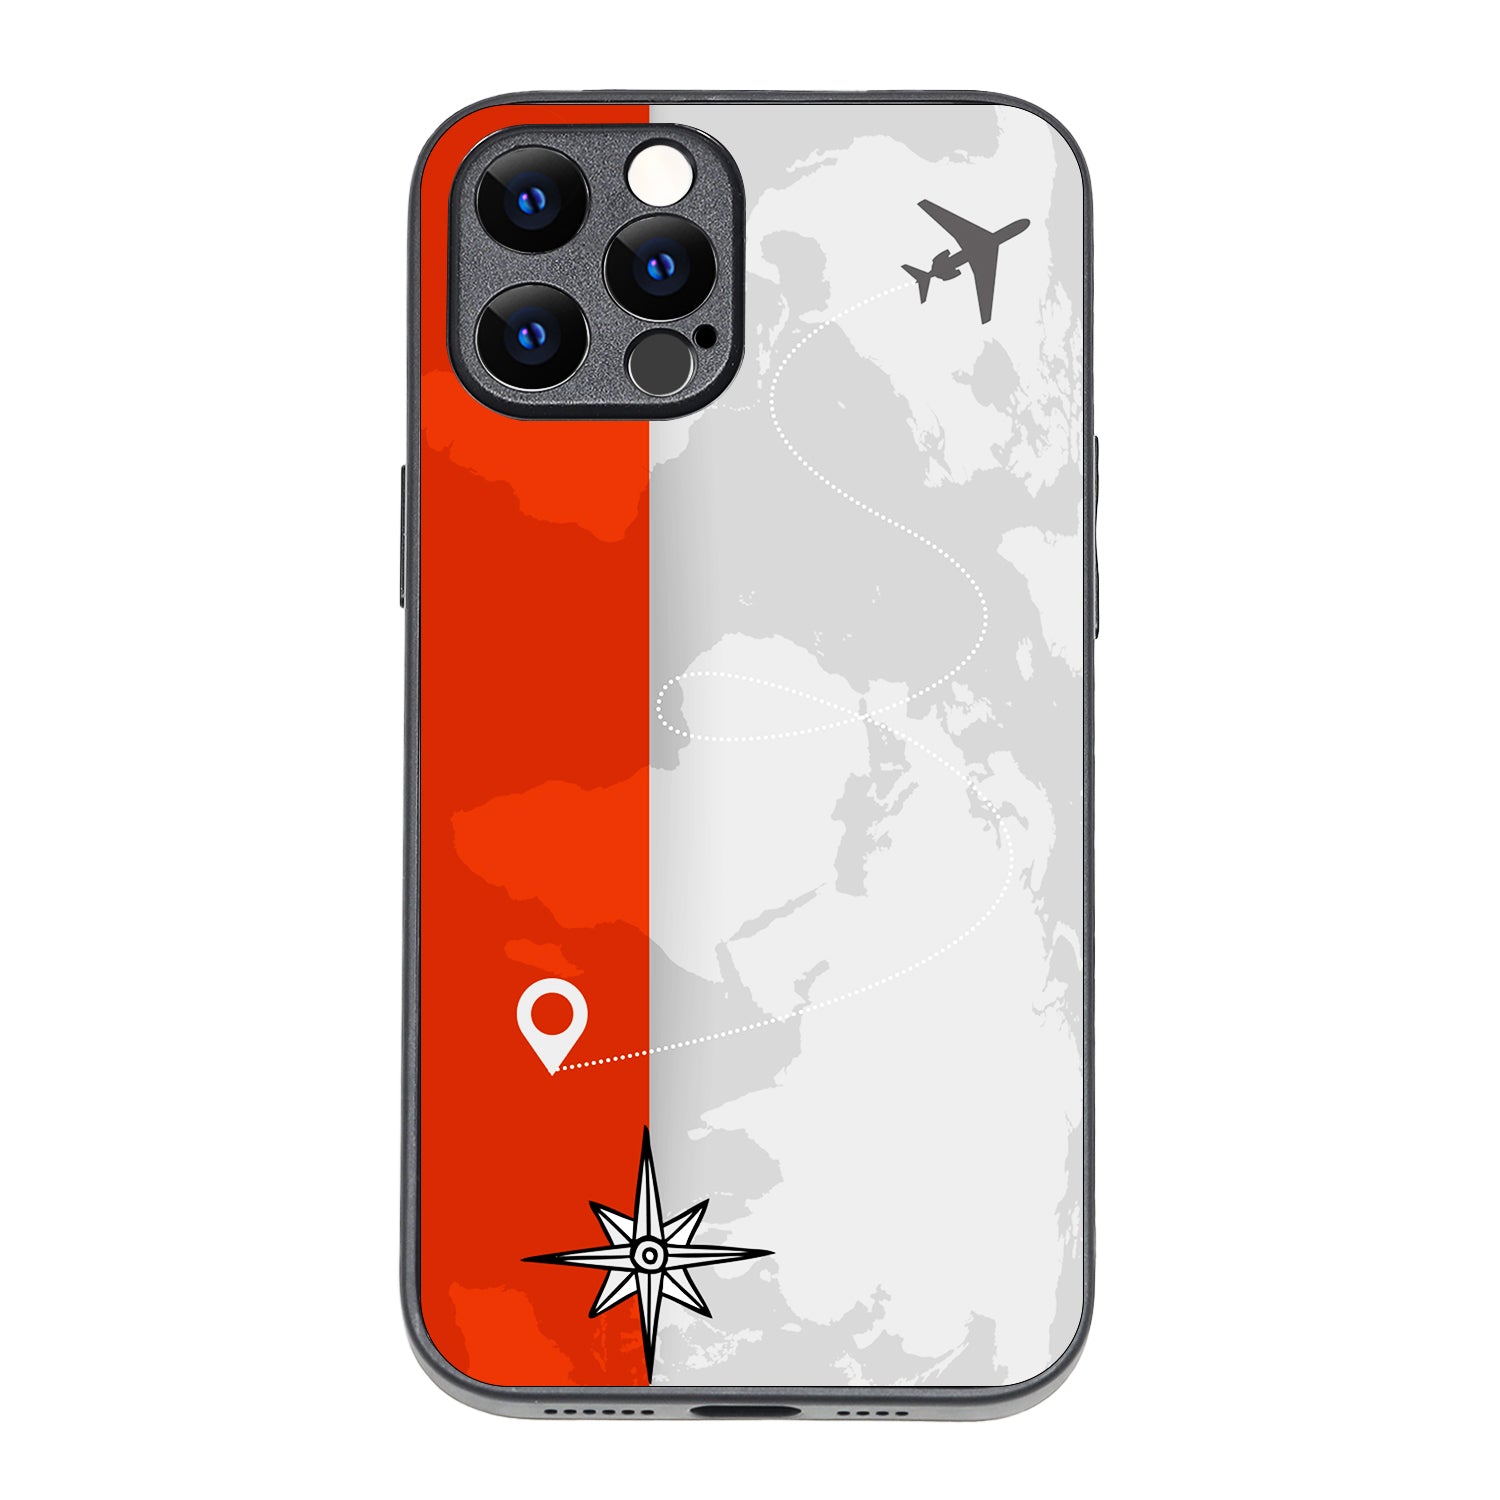 World Tour Travel iPhone 12 Pro Max Case